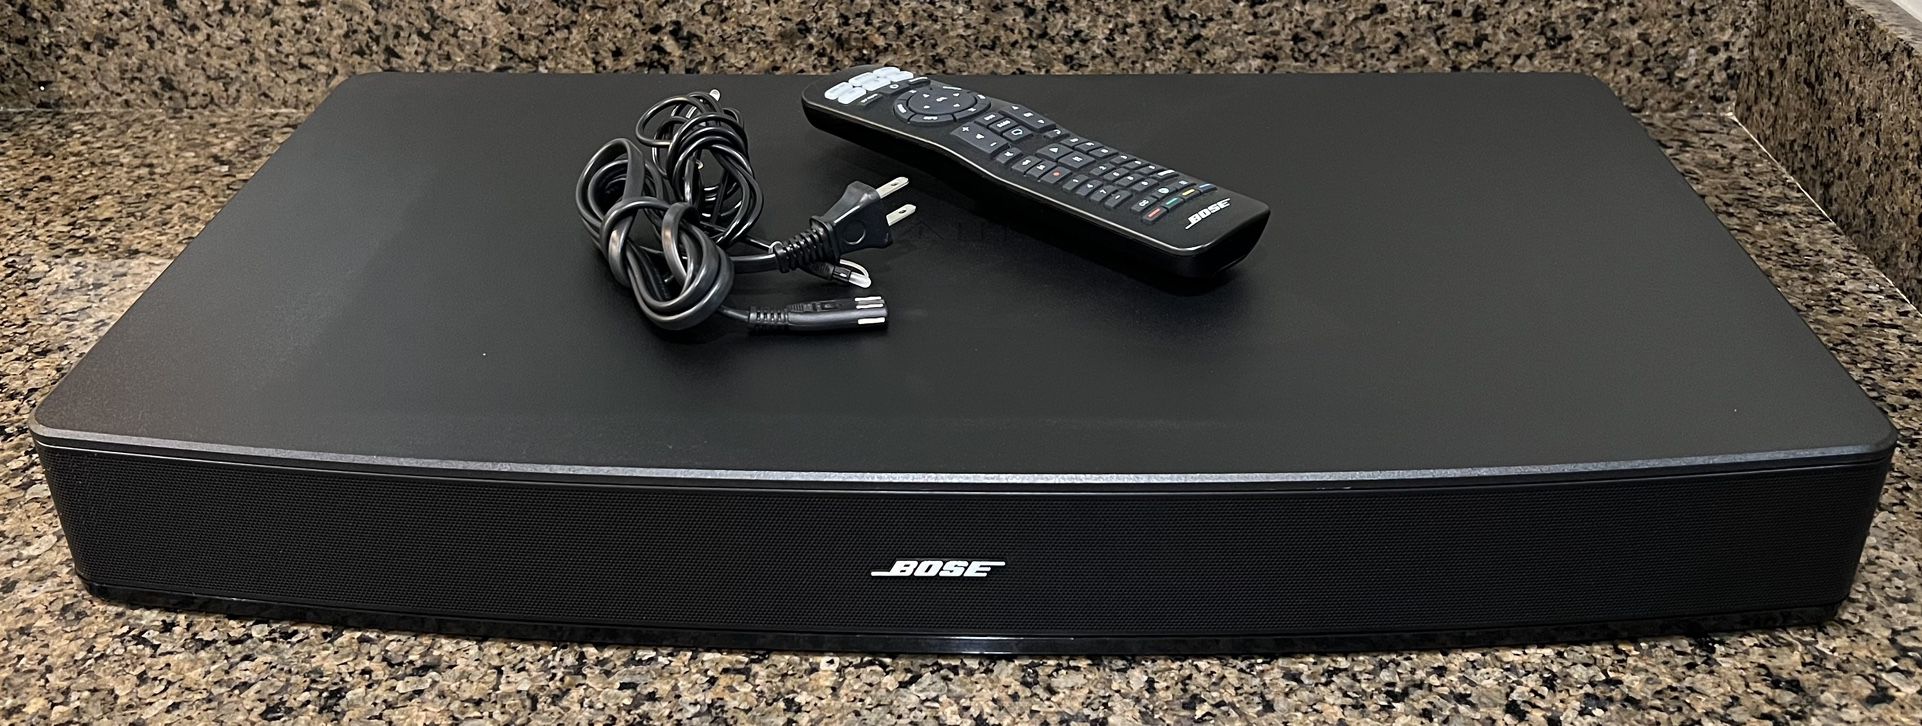 aften gavnlig Musling Bose Solo 15 Series II TV Sound System for Sale in Maitland, FL - OfferUp